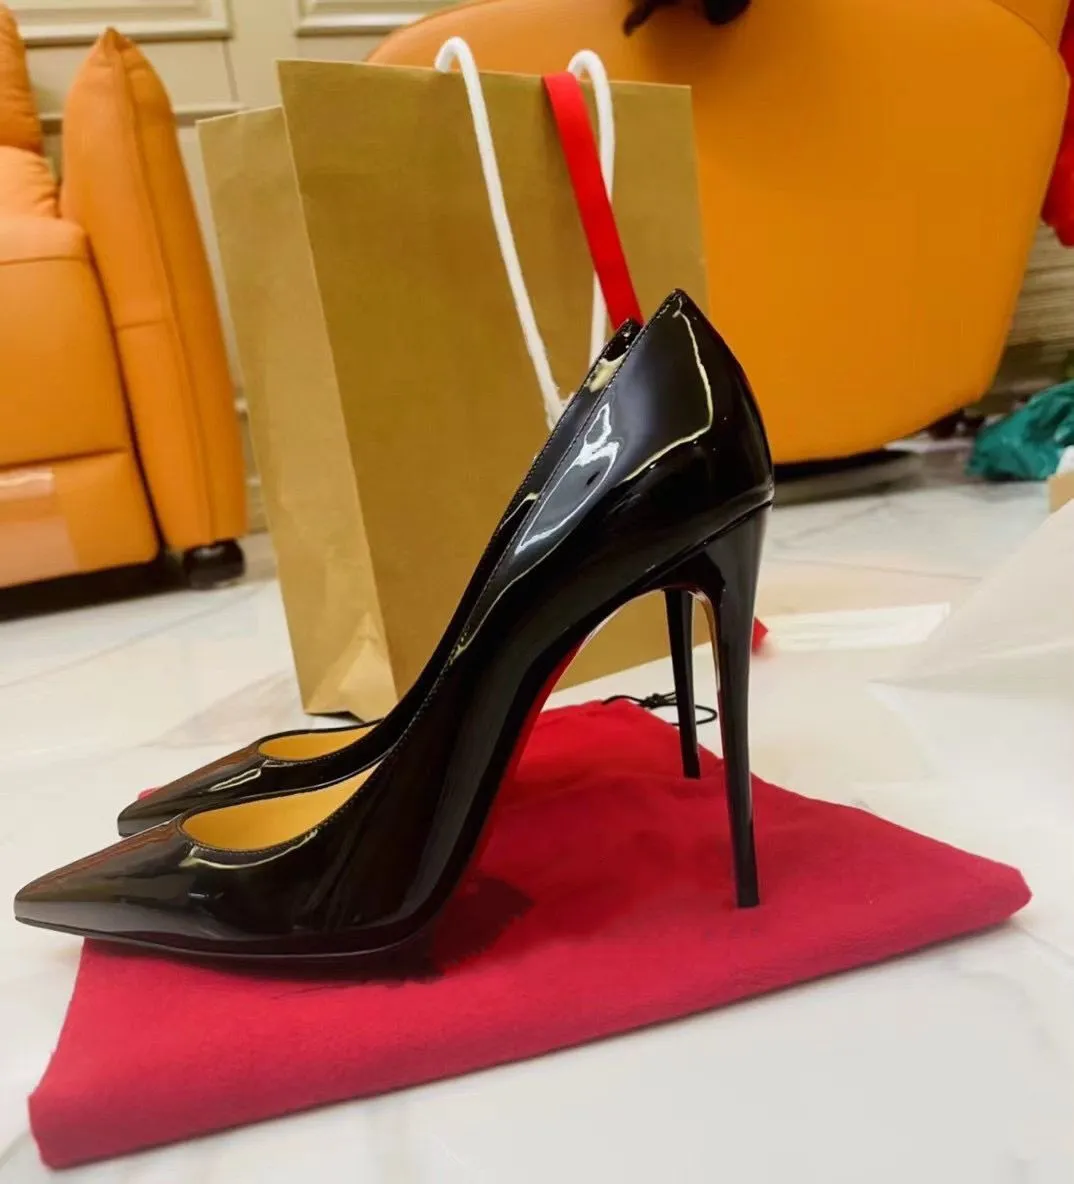 Så Kate Women High Heels Shoes Luxury Brand Red Shiny Bottoms Pointed Toe Shoes Classics 8cm 10cm 12cm Thin Heel Lady Wedding Shoe Plus Size 34-44 No Box